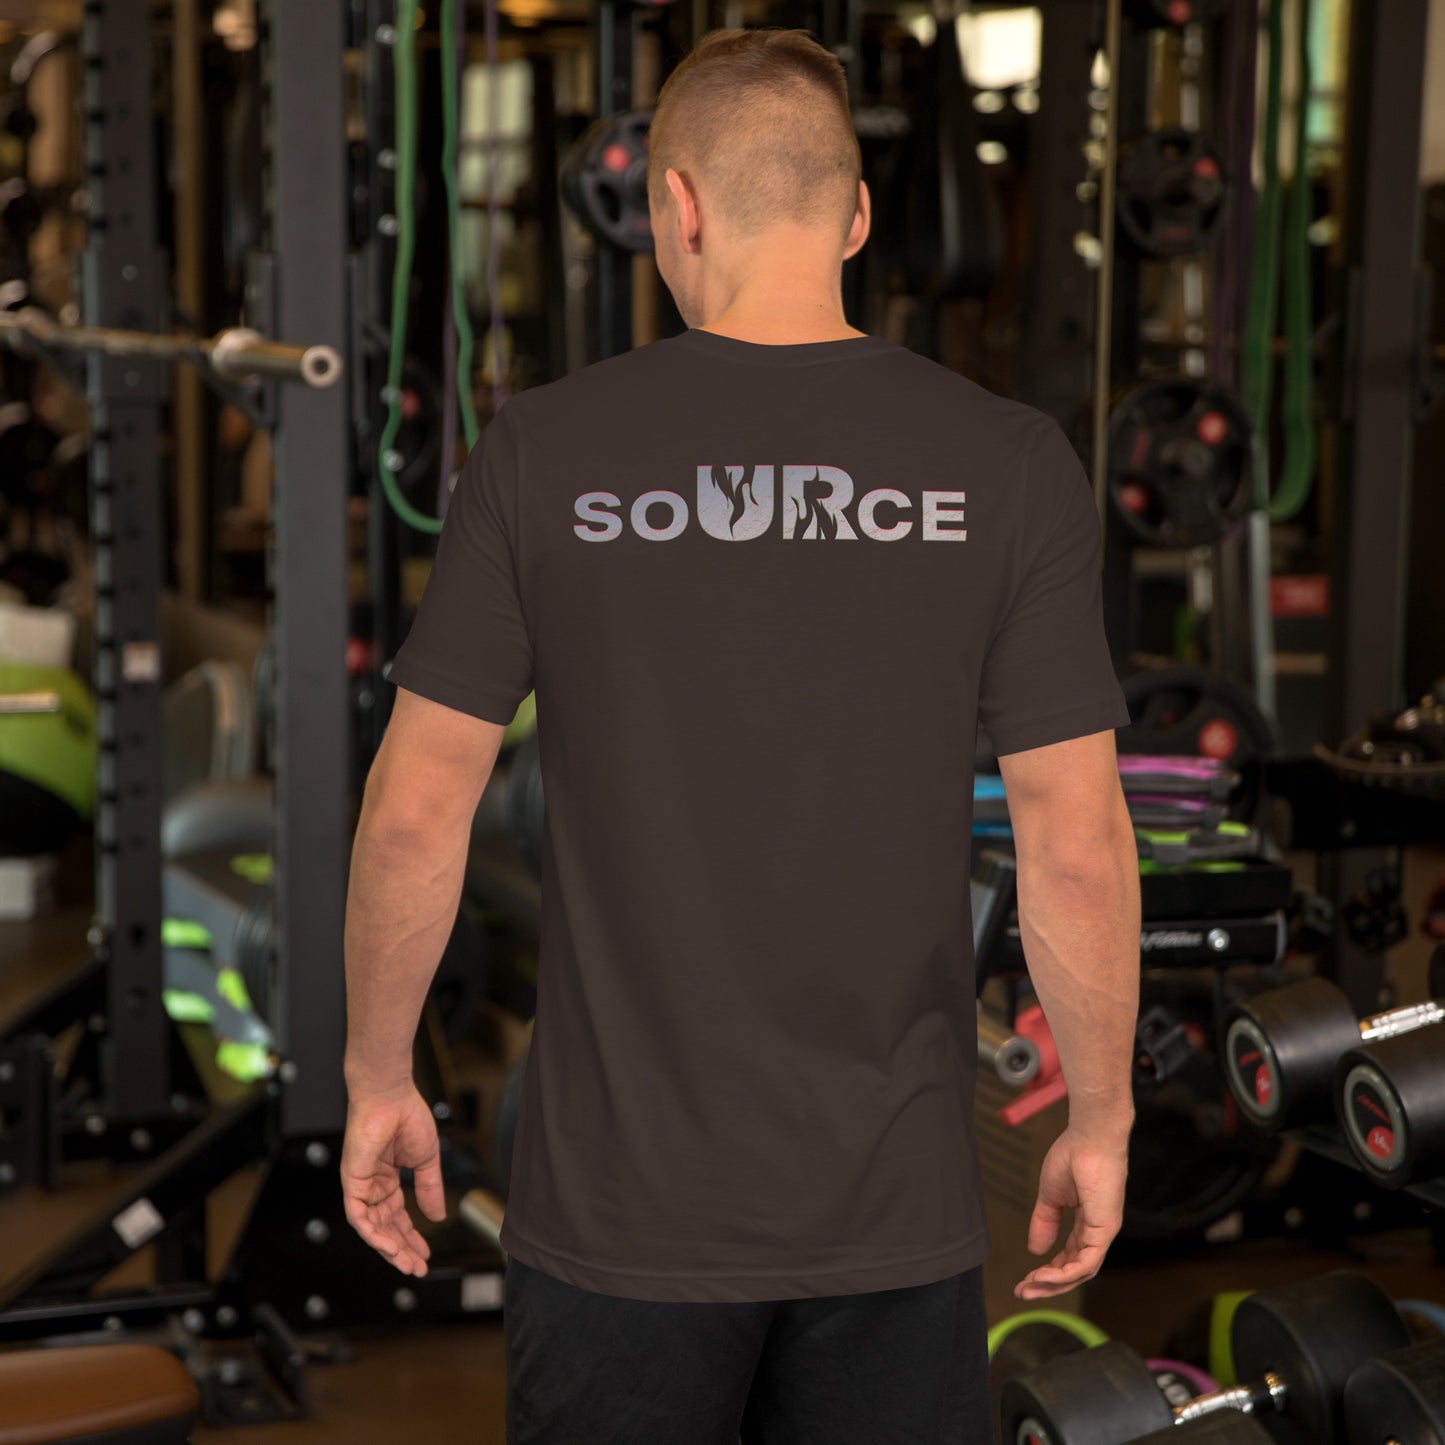 soURce - Unisex t-shirt